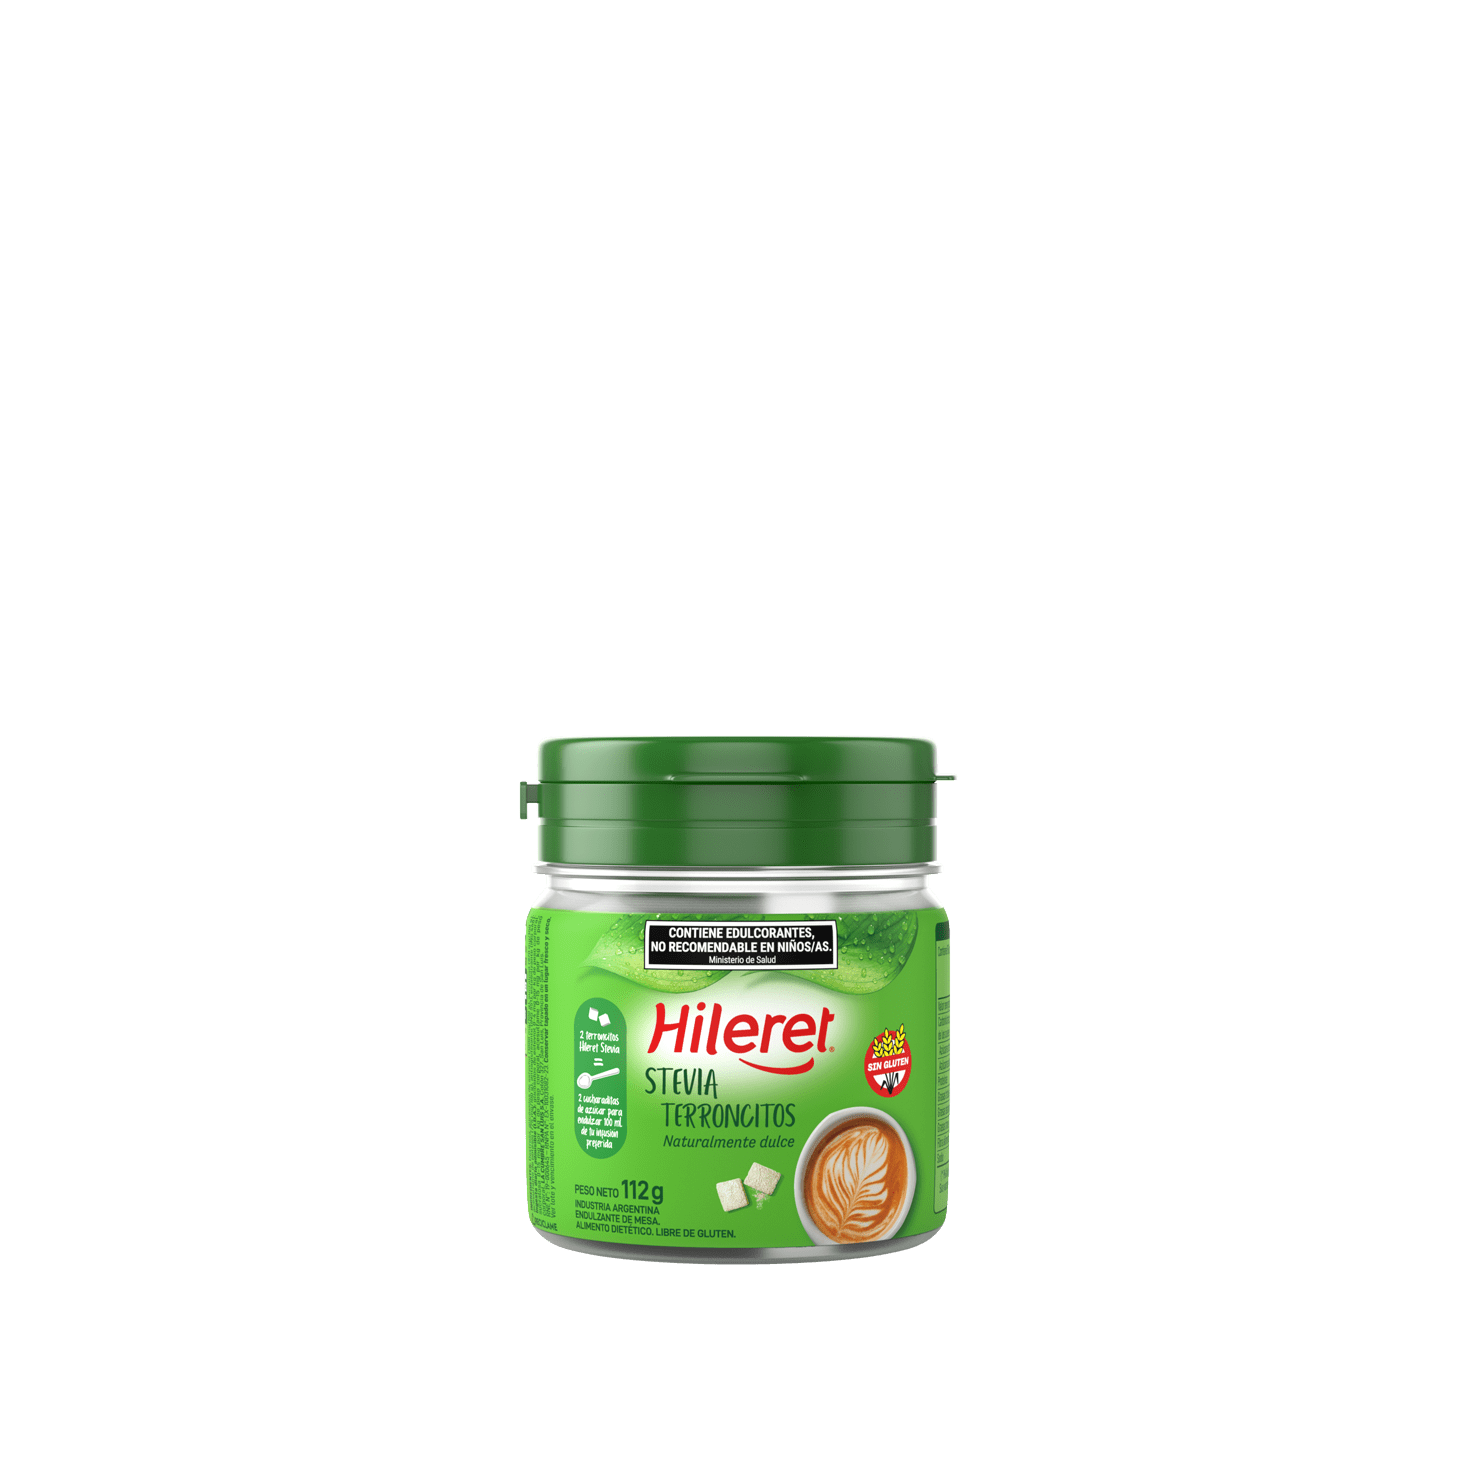 Hileret Stevia - Terroncitos - 